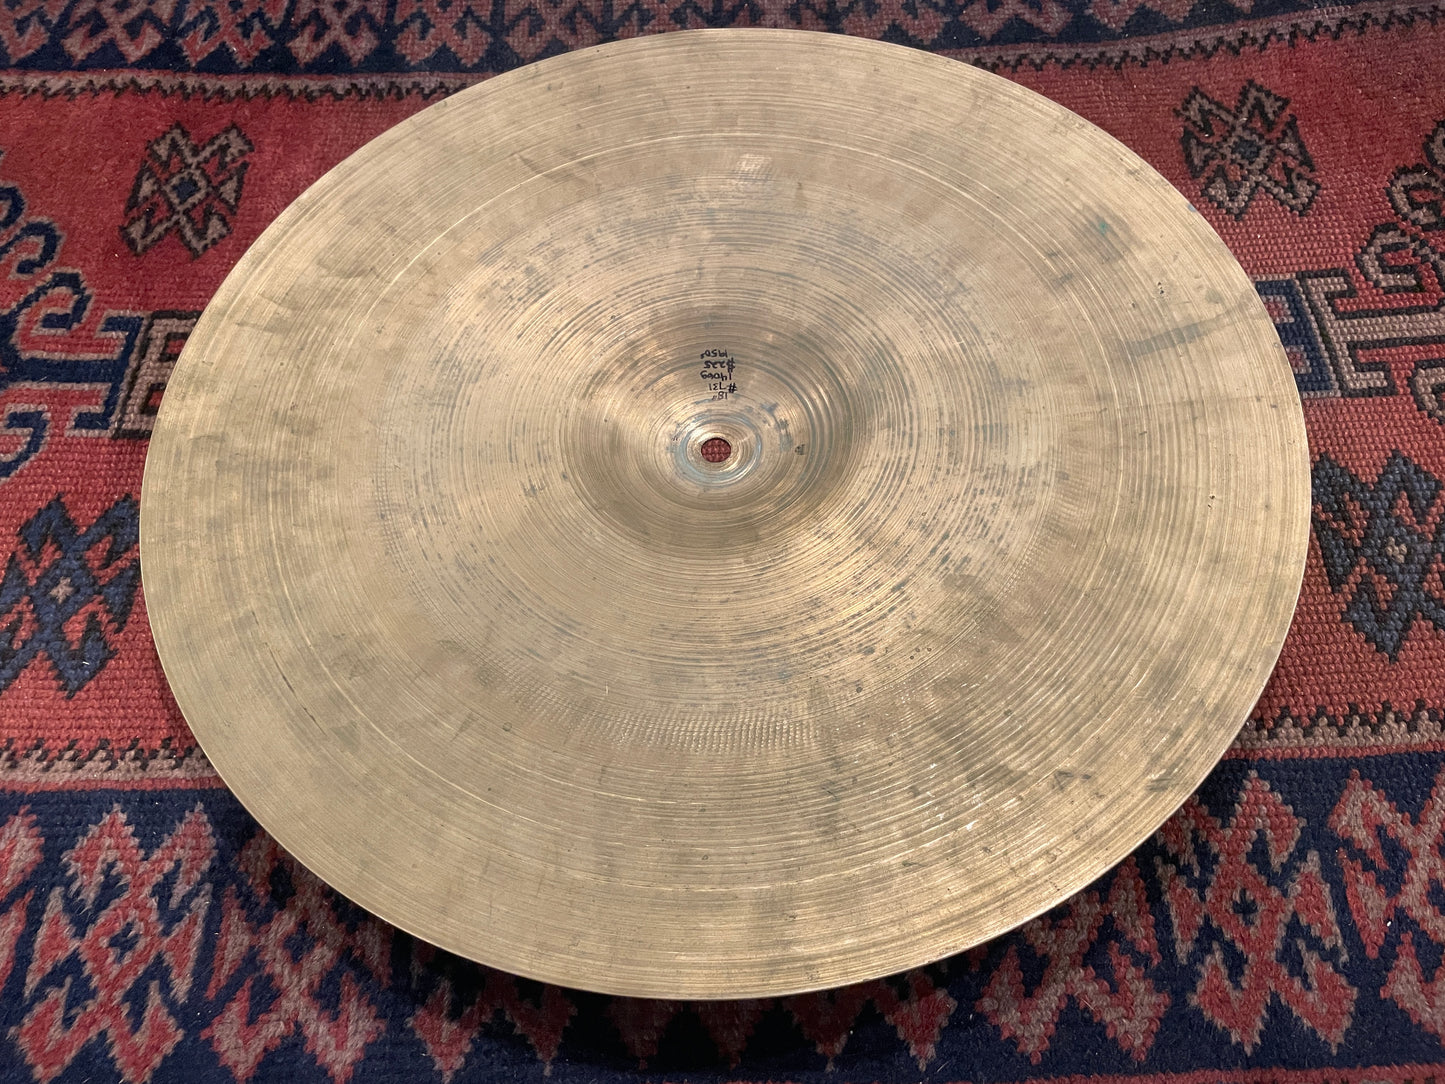 18" Zildjian A 1950s Medium Thin Ride Cymbal 1406g #731